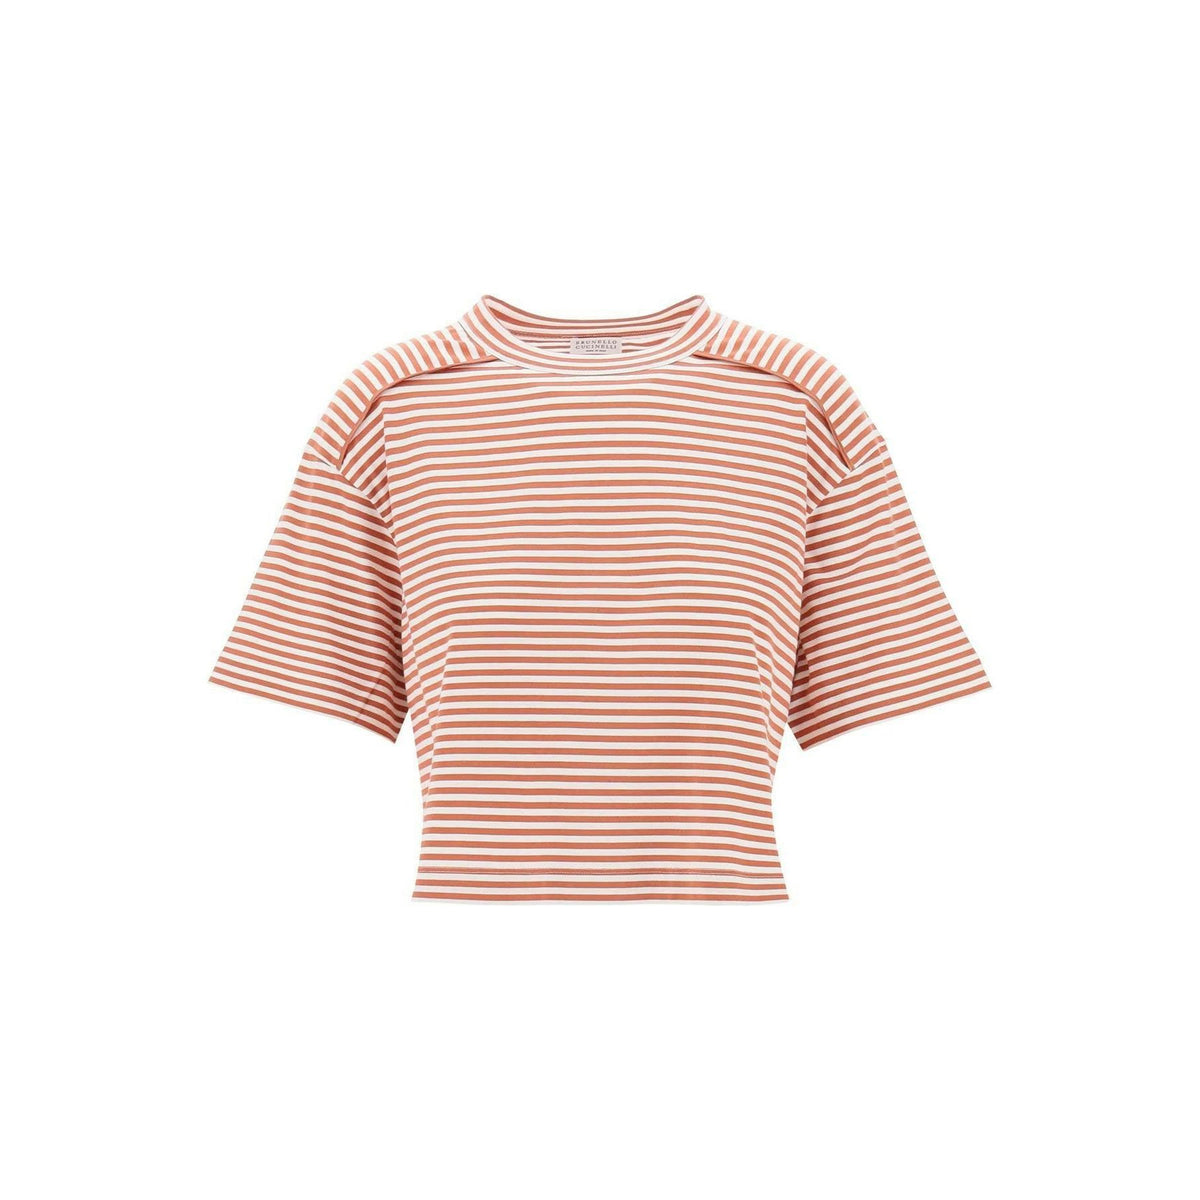 BRUNELLO CUCINELLI - Monili-Trimmed Orange and White Striped Cotton Jersey T-Shirt - JOHN JULIA